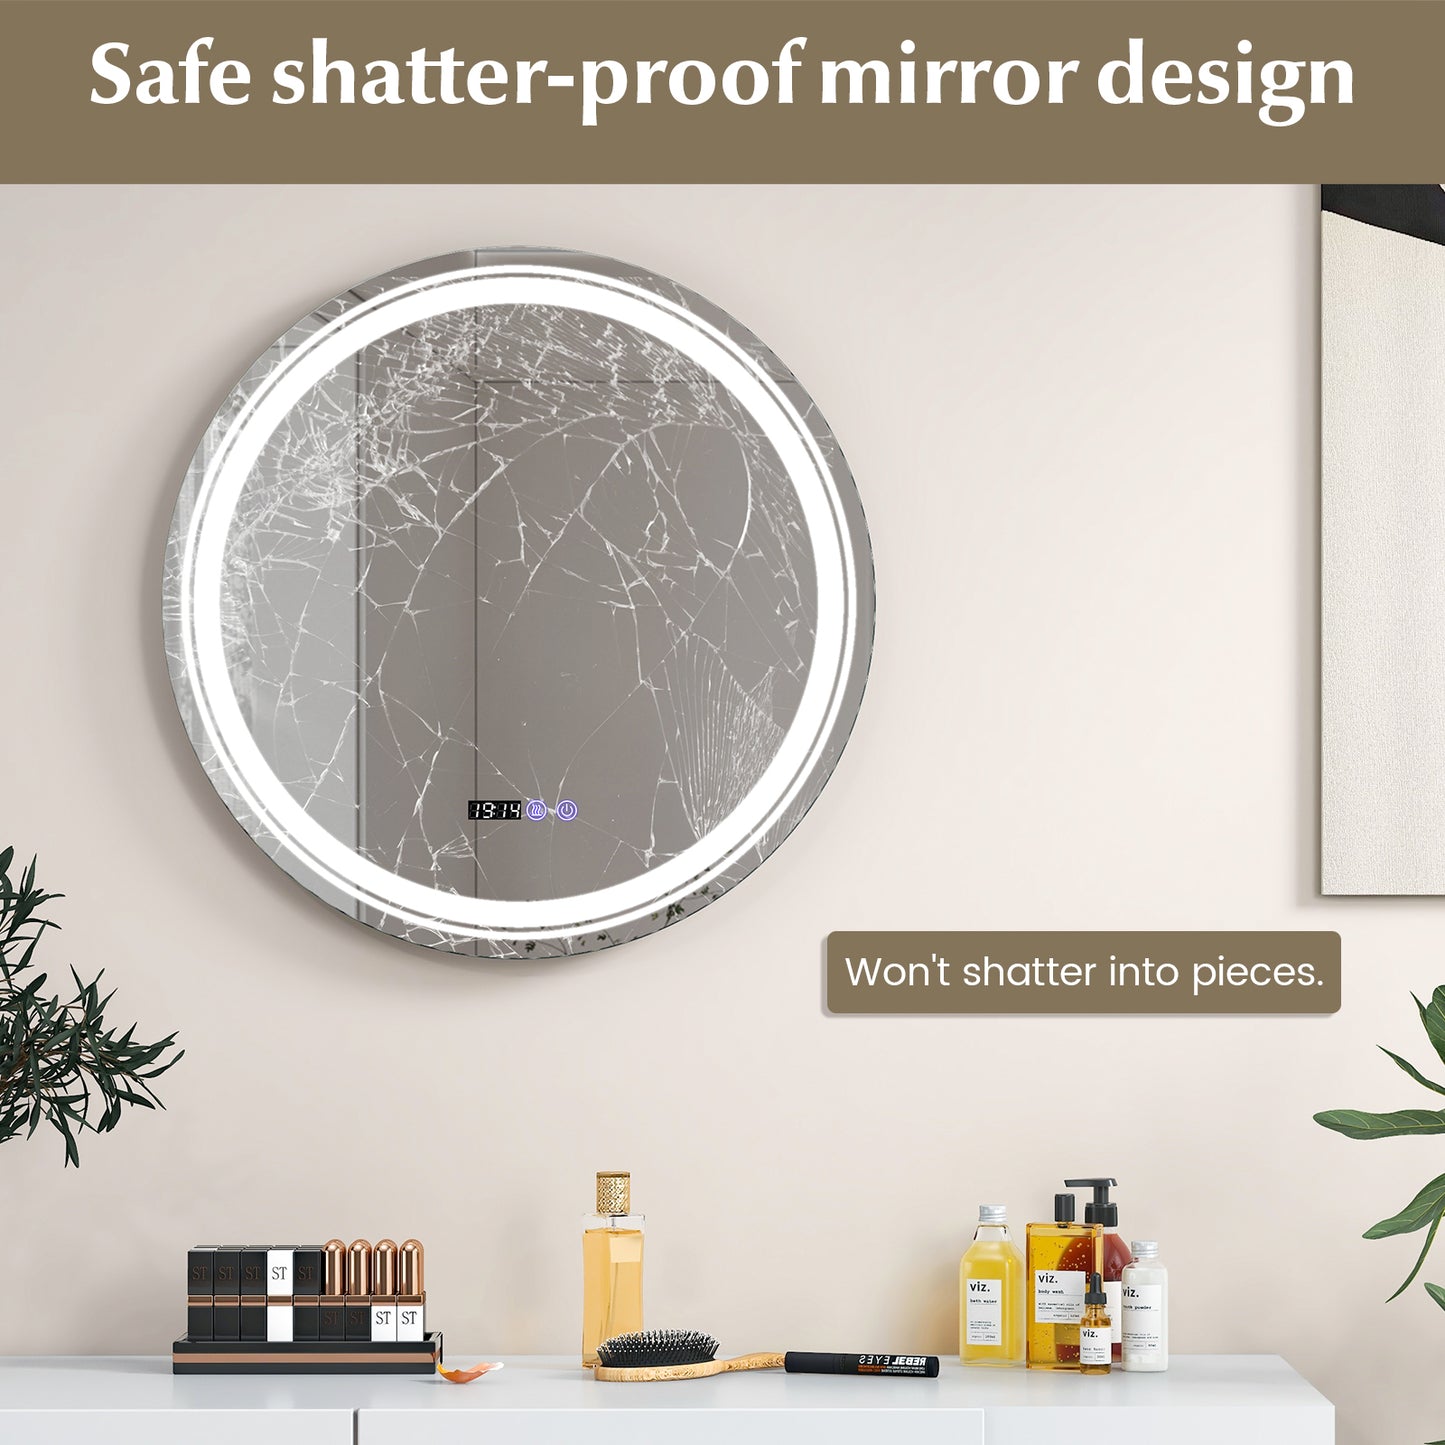 Anti-Fog Round Led Bathroom Mirror with 3 Color LED Lights-M